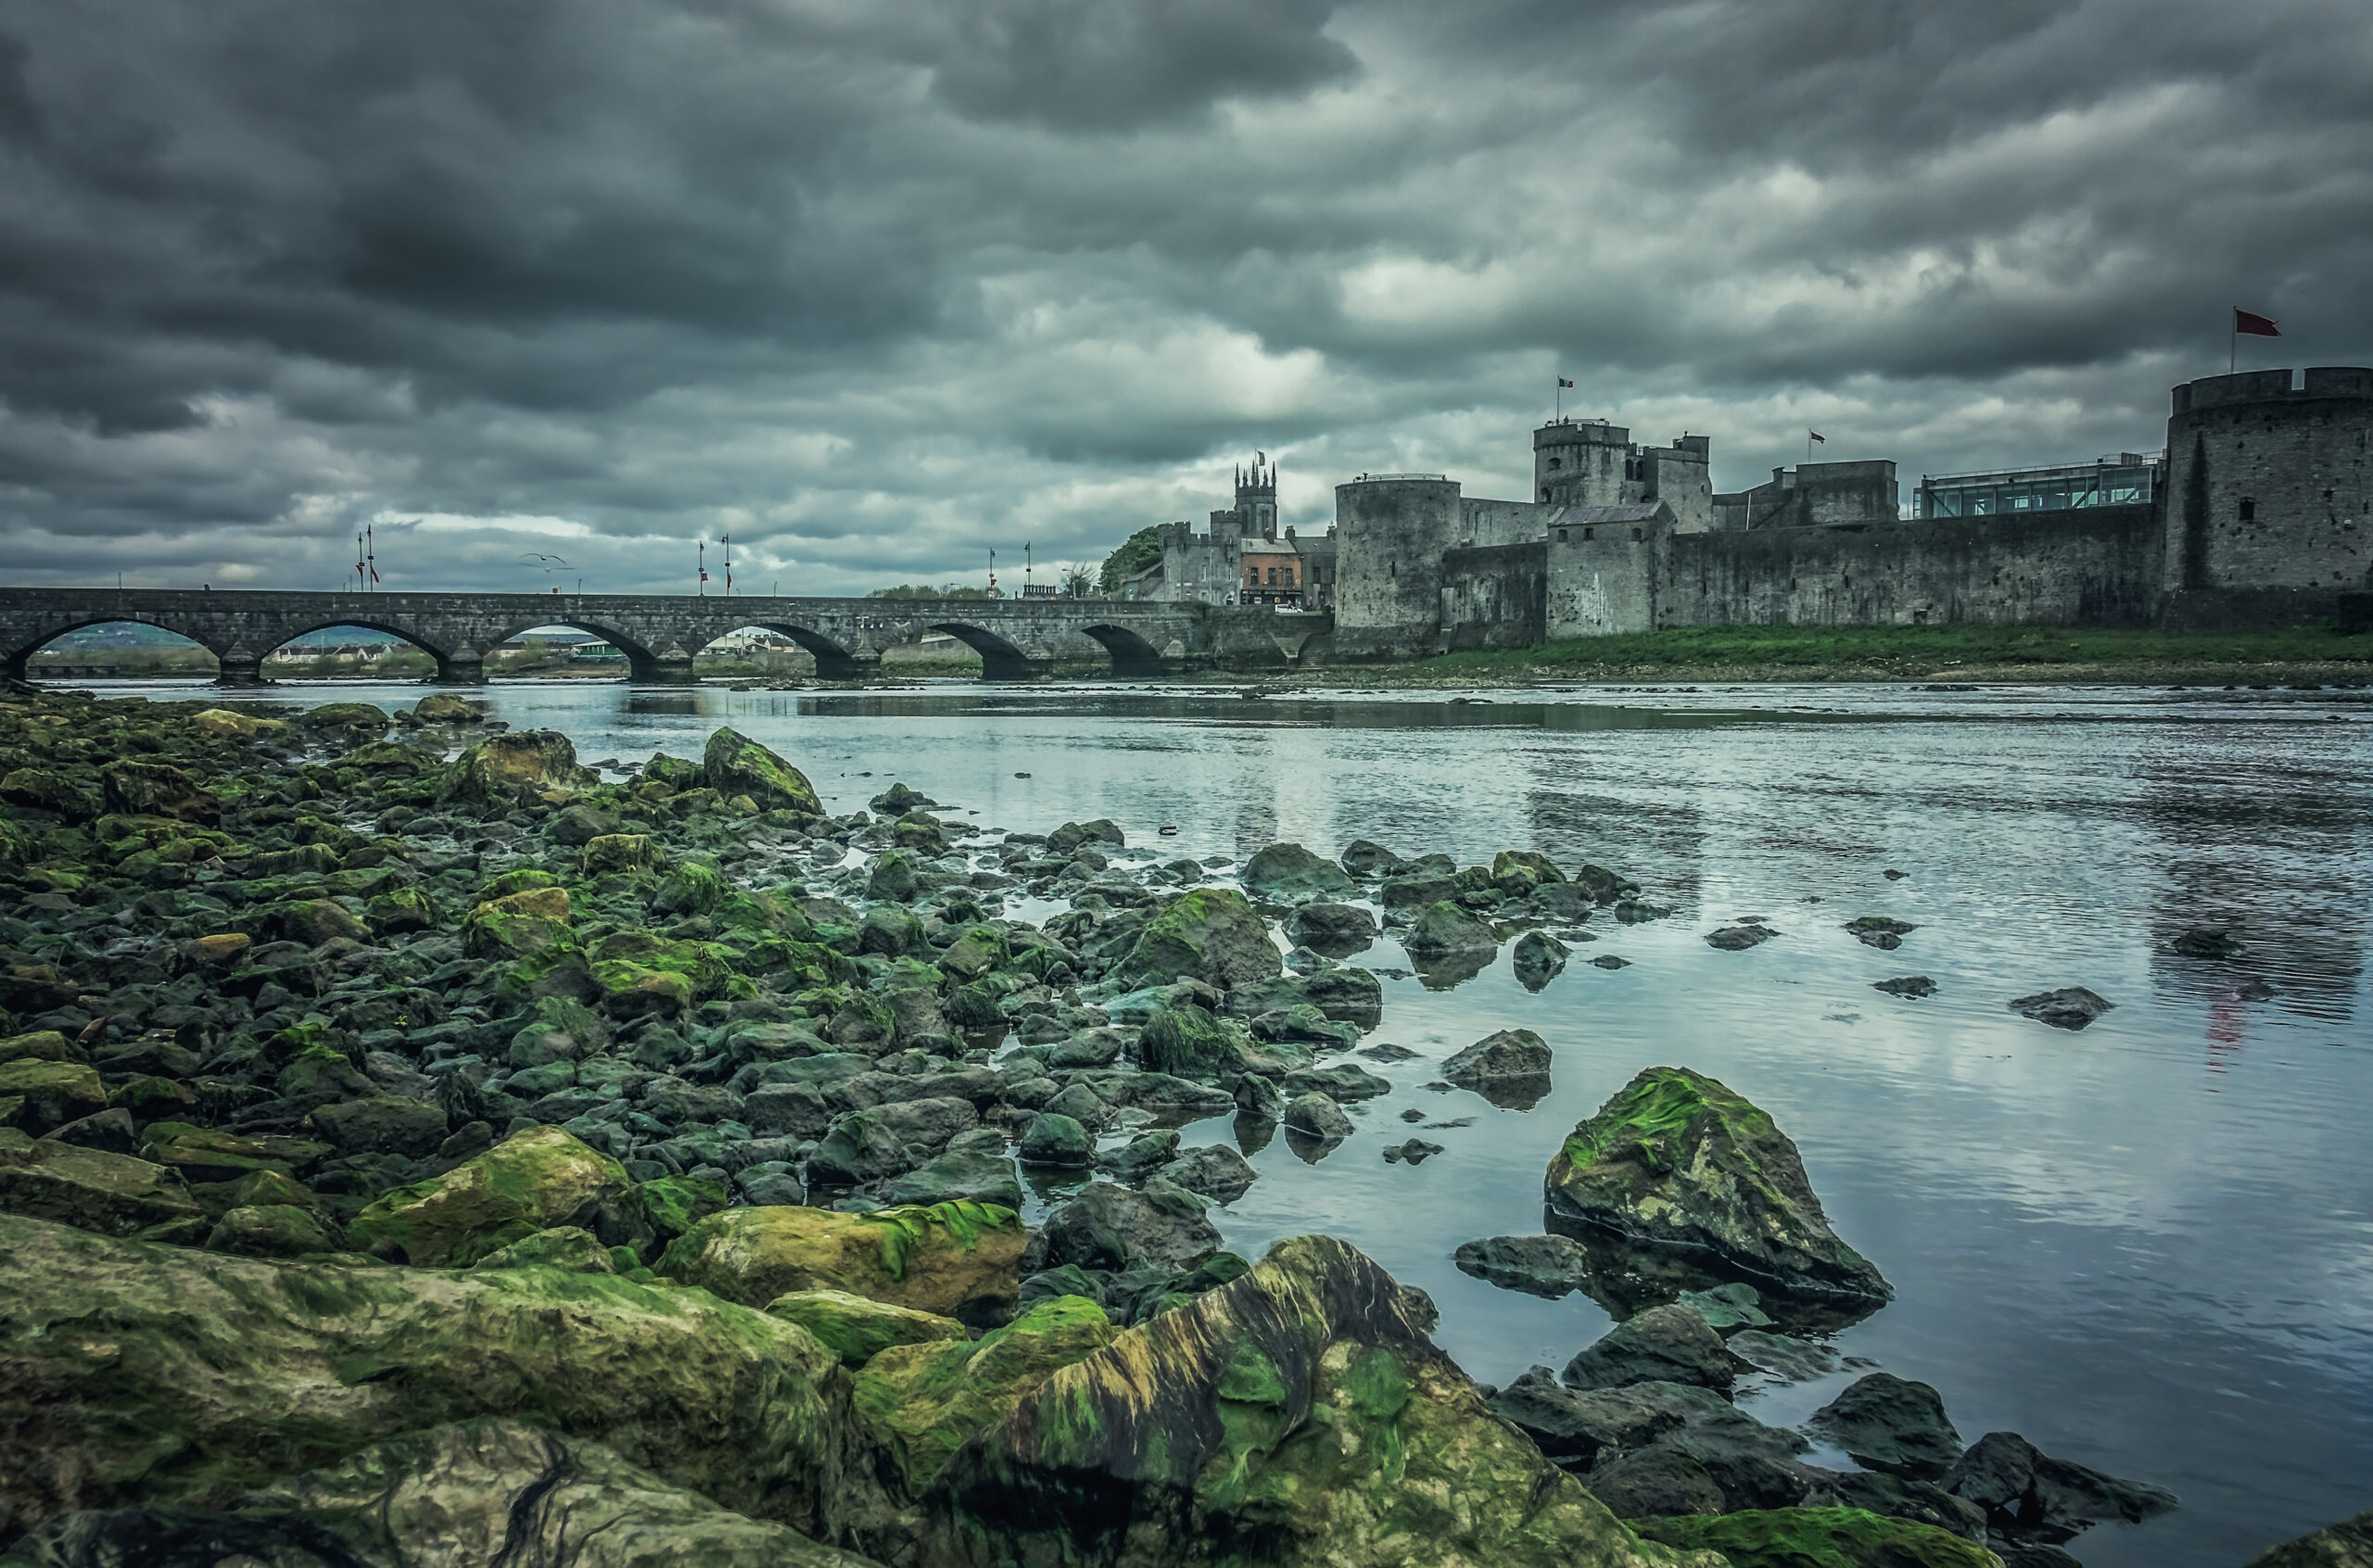 King Johns Castle in Limerick